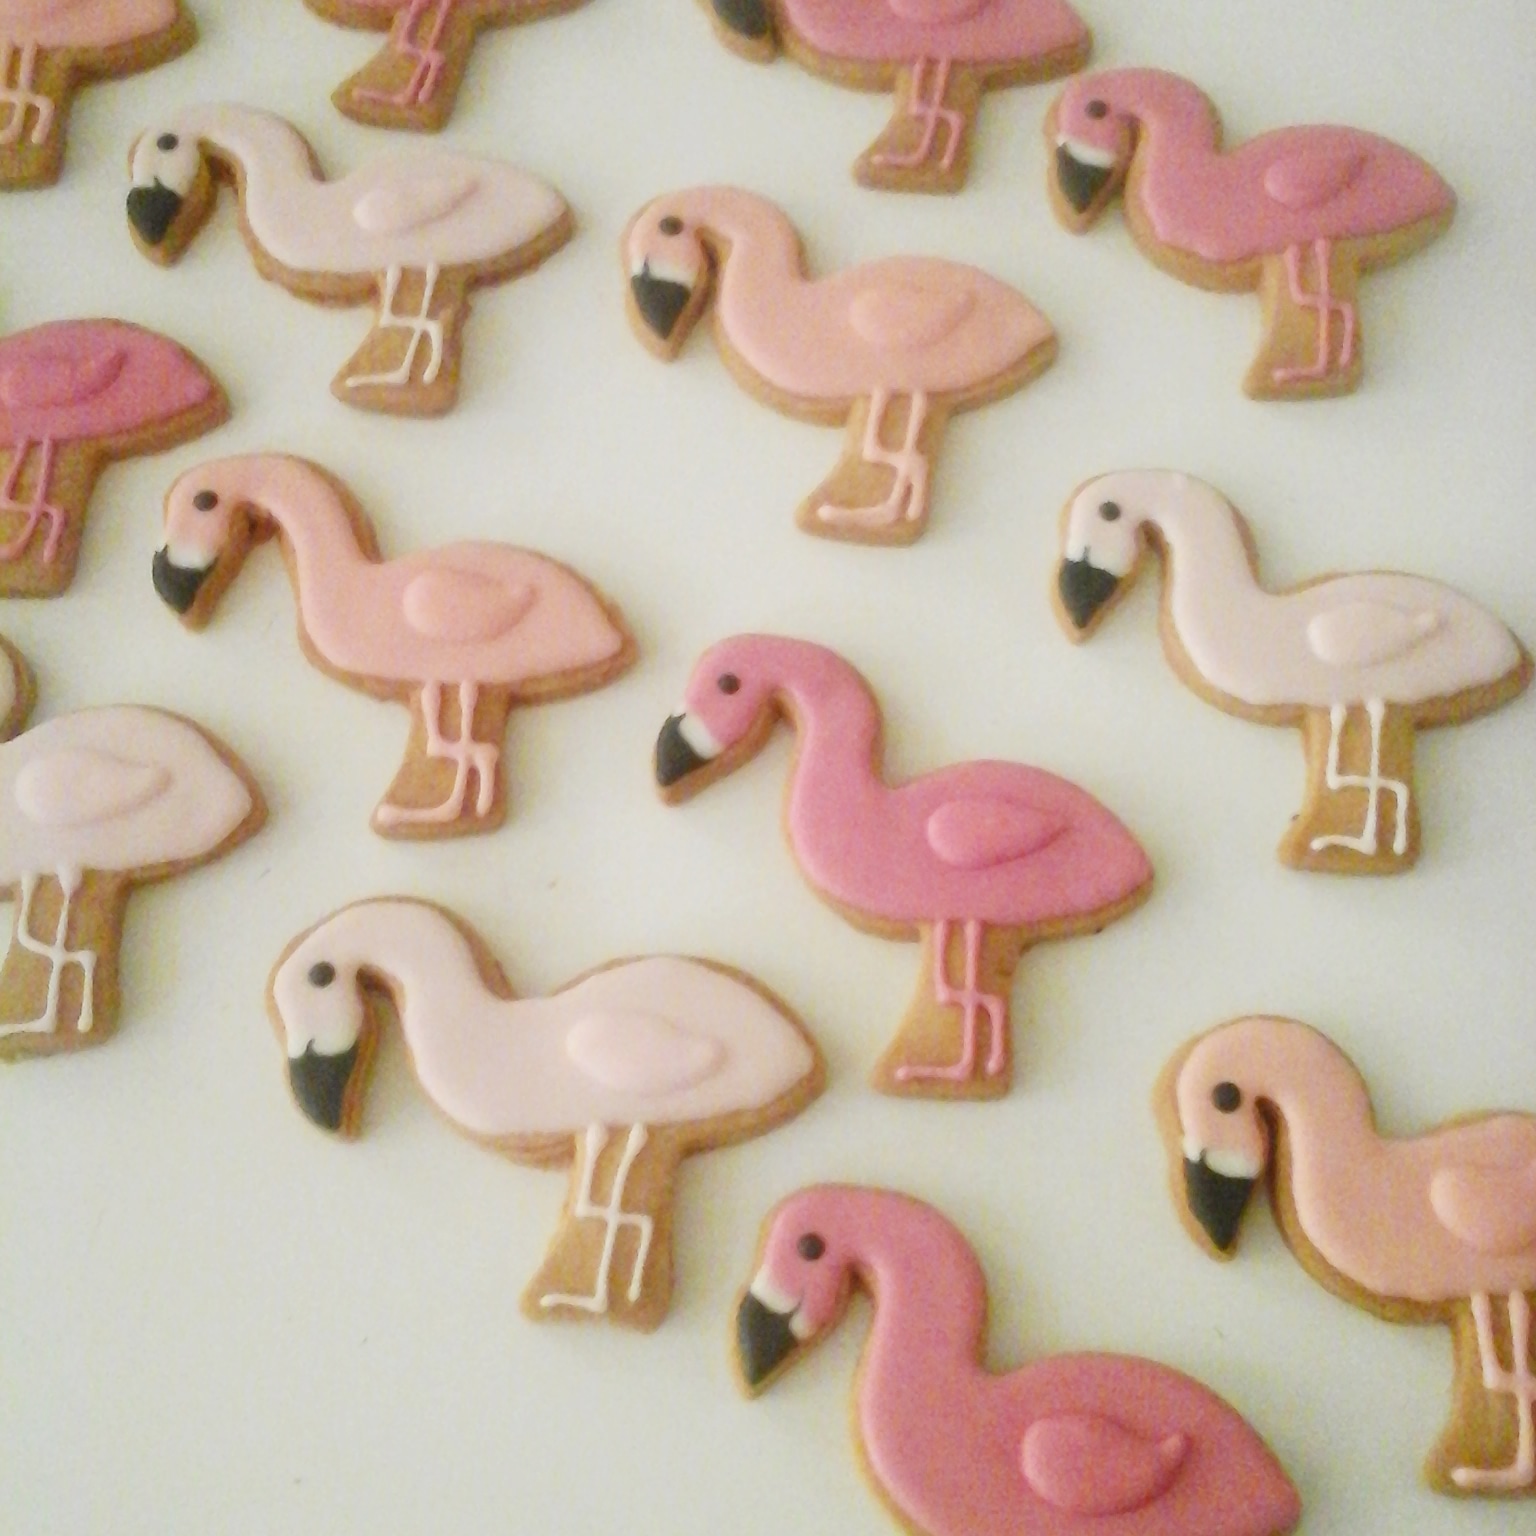 flamingo koekjes / flamingo cookies